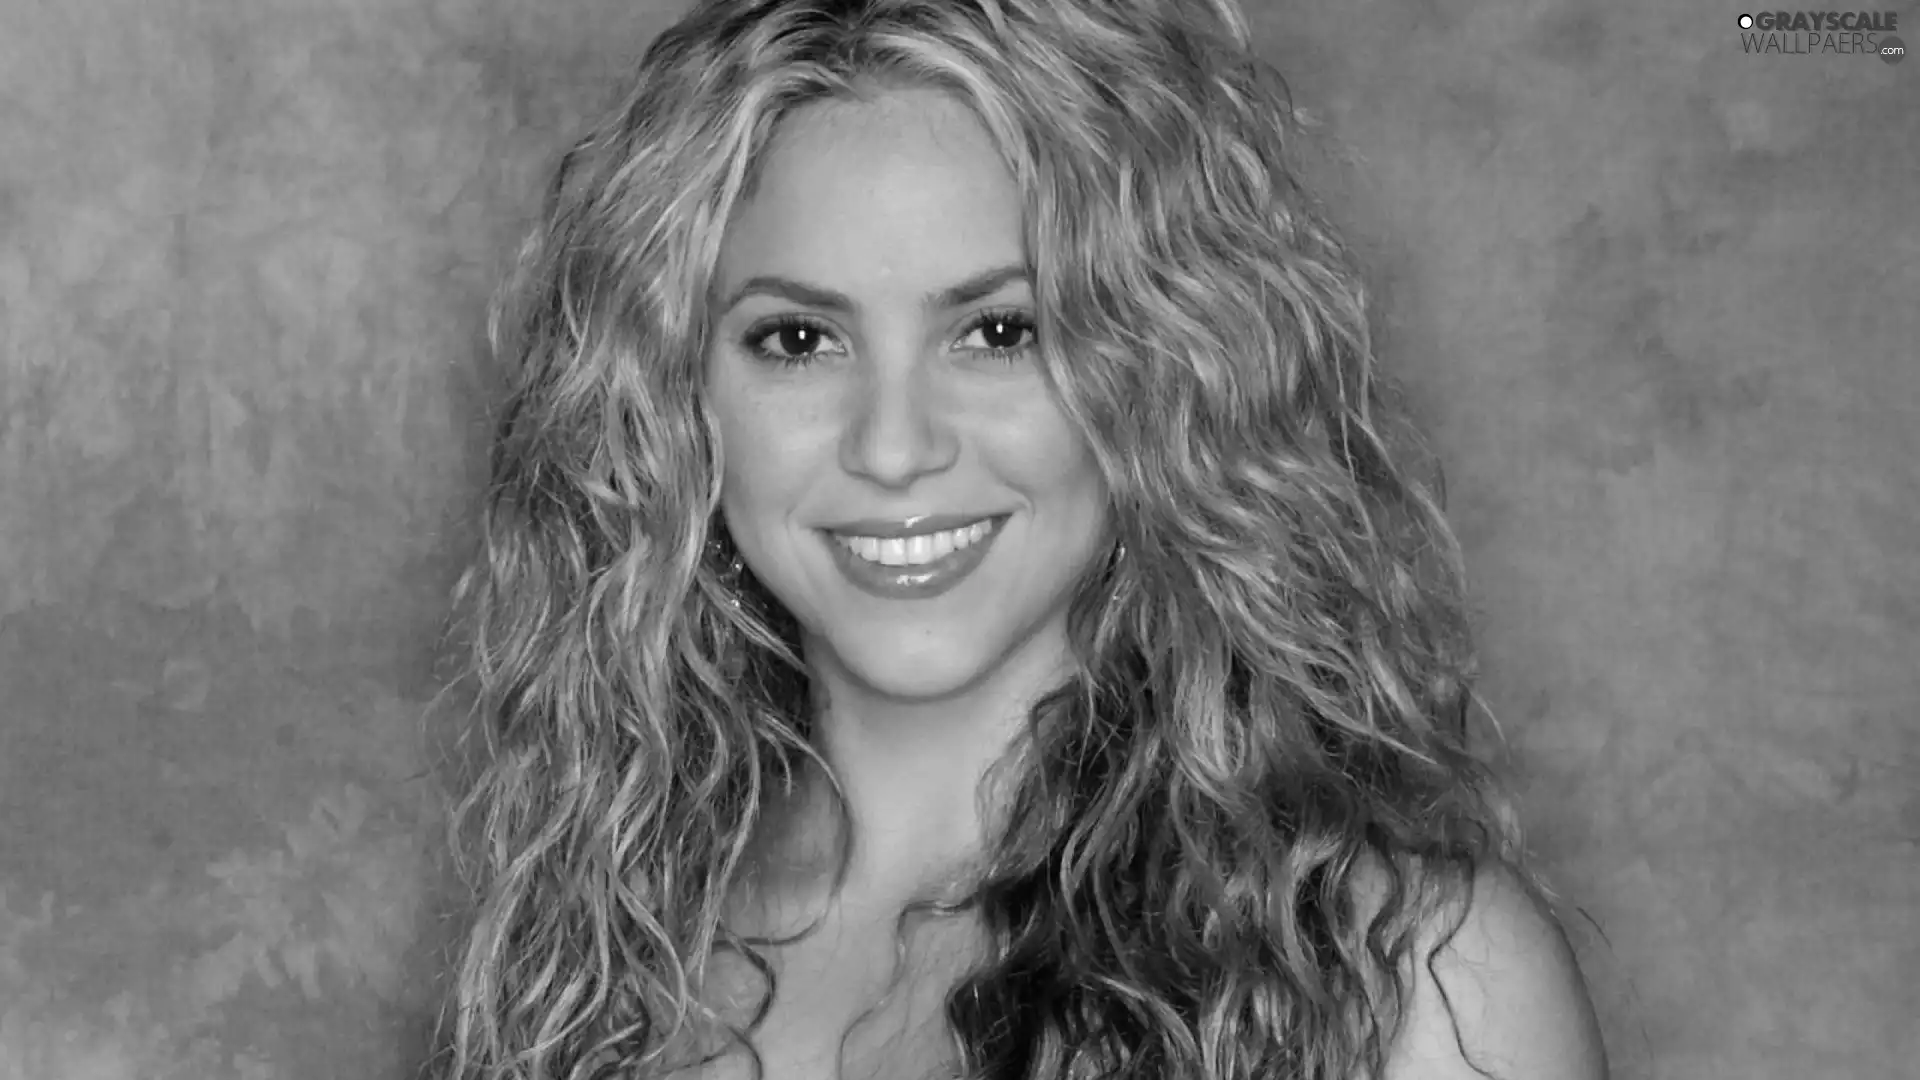 smiling, Shakira